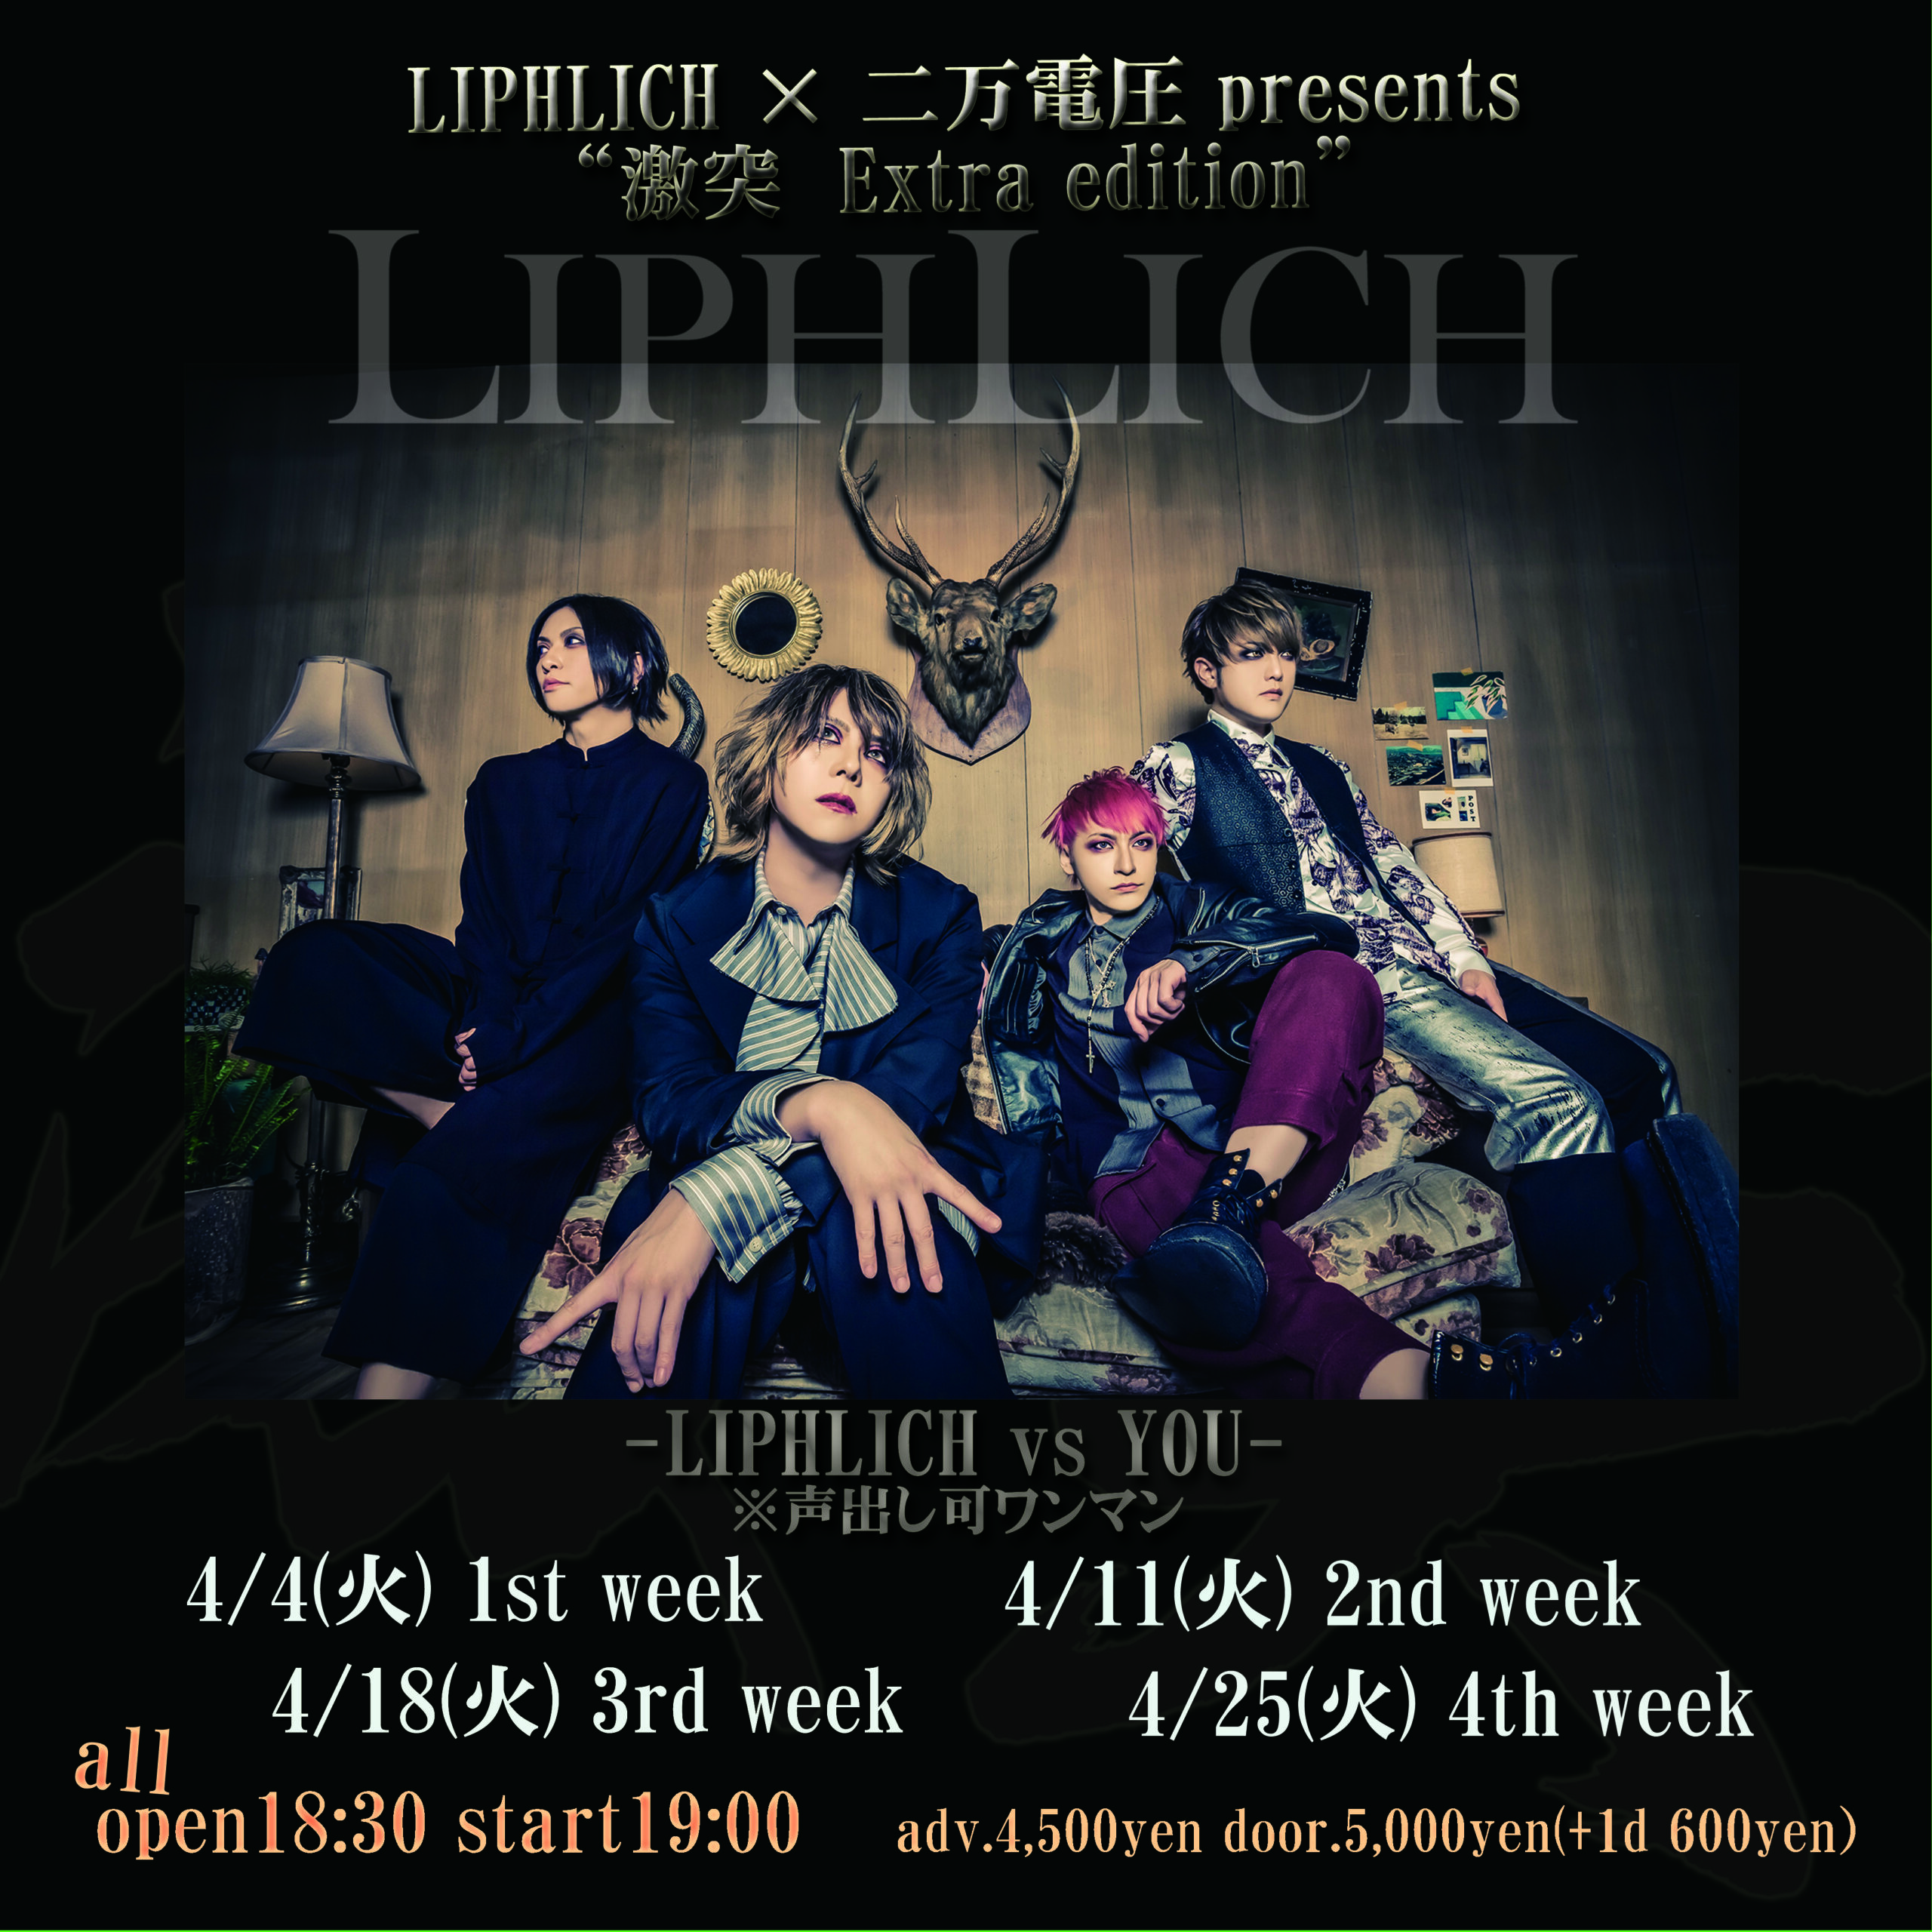 LIPHLICH × 二万電圧 presents ”激突 Extra edition” -LIPHLICH vs YOU 2nd week-  ※声出し可ワンマン